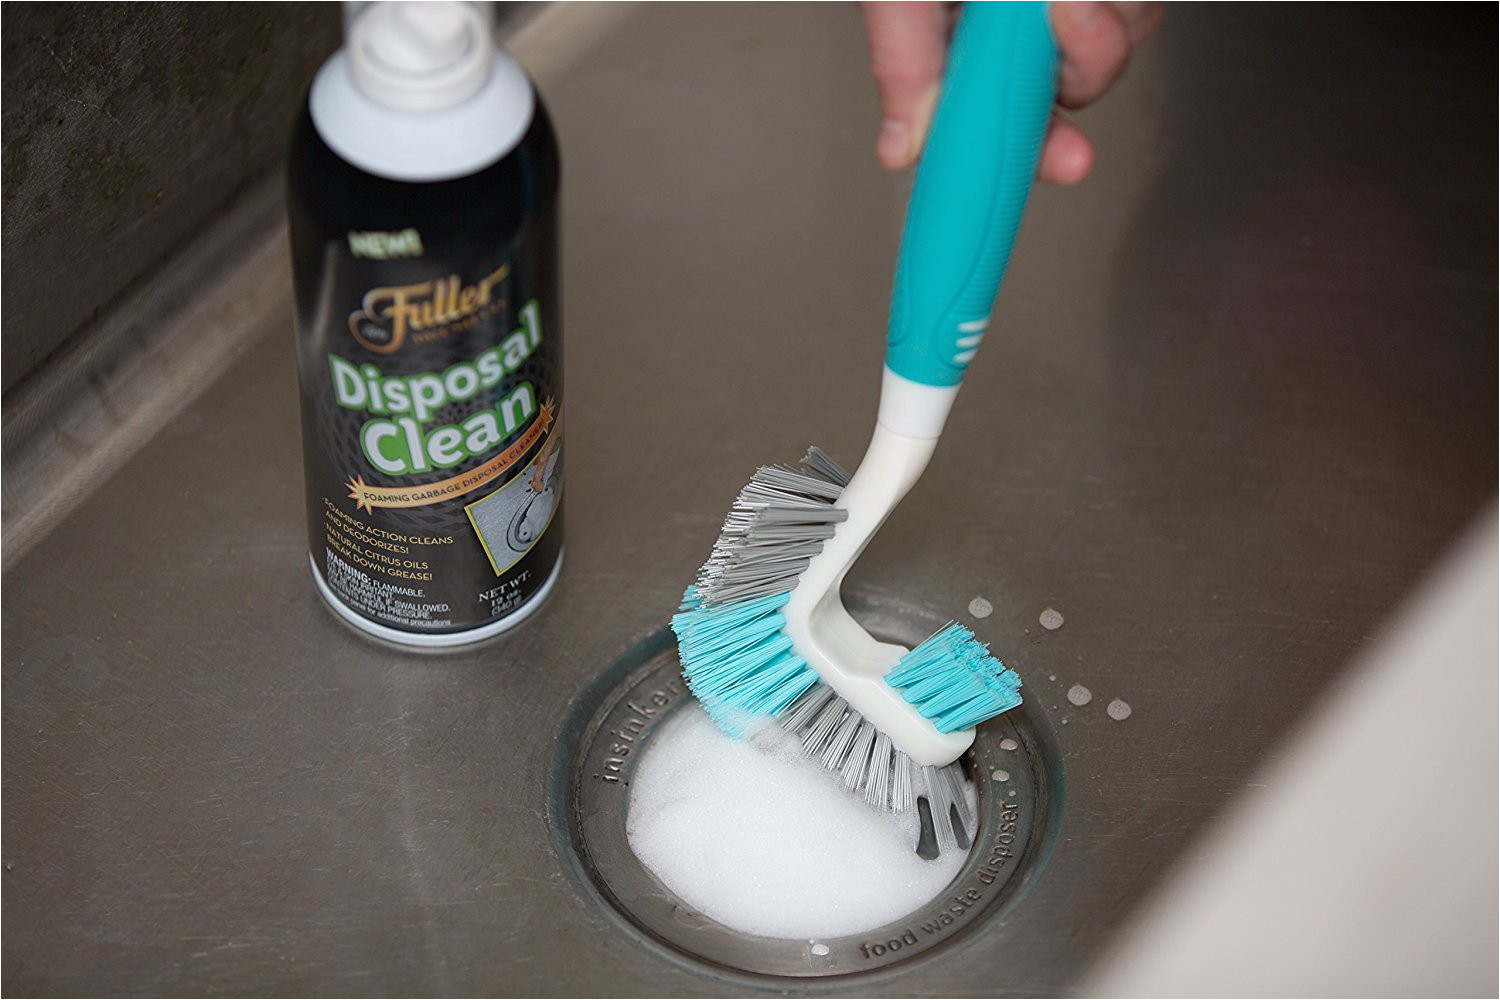 amazon com fuller brush garbage disposal cleaner foaming action fresh citrus scent 12 oz home kitchen